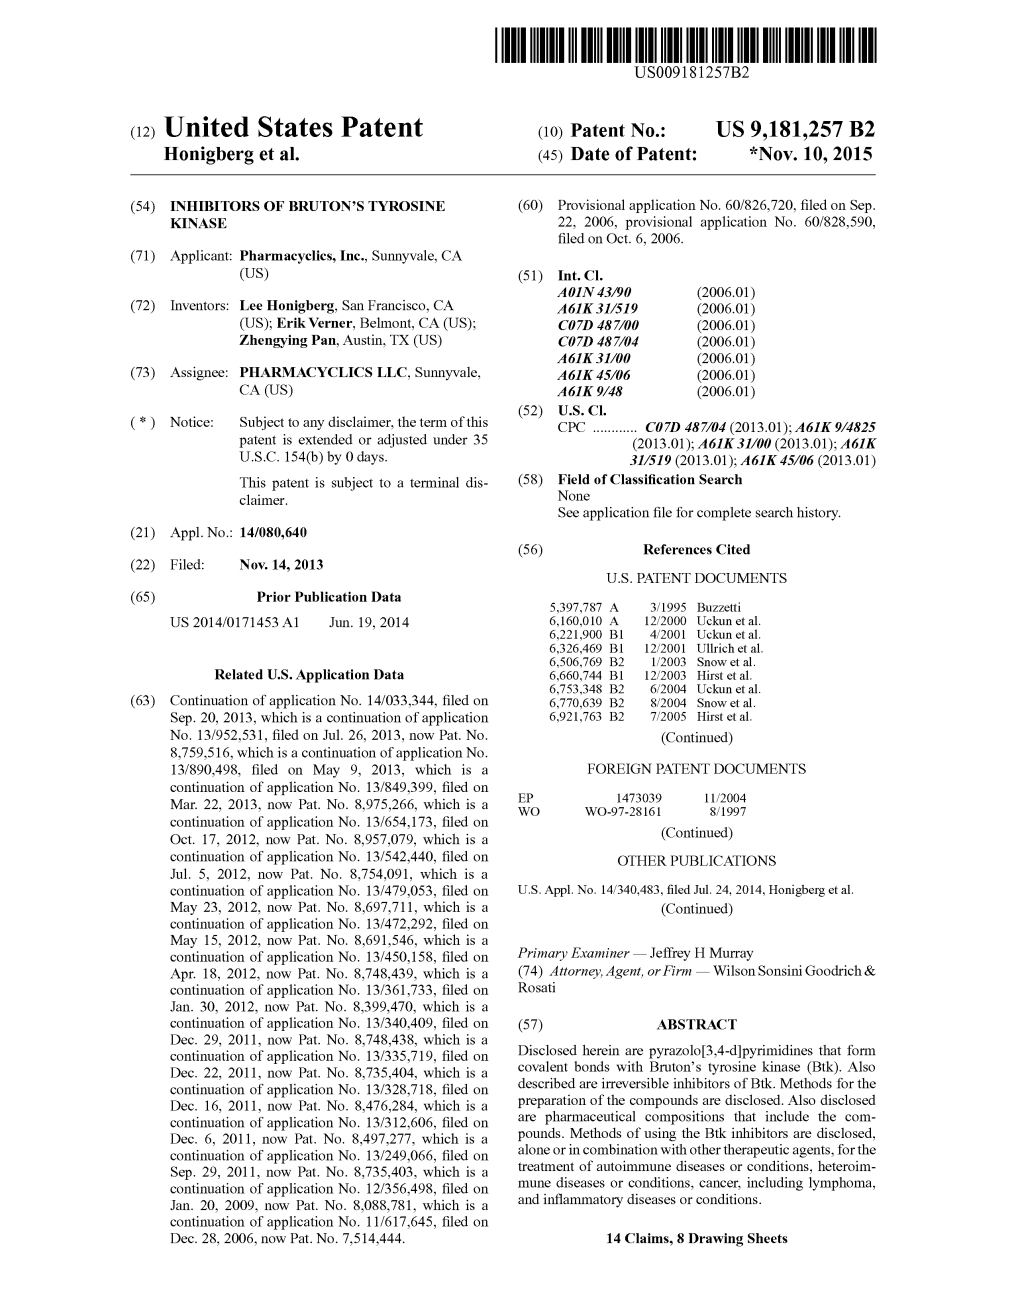 (12) United States Patent (10) Patent No.: US 9,181,257 B2 Honigberg Et Al